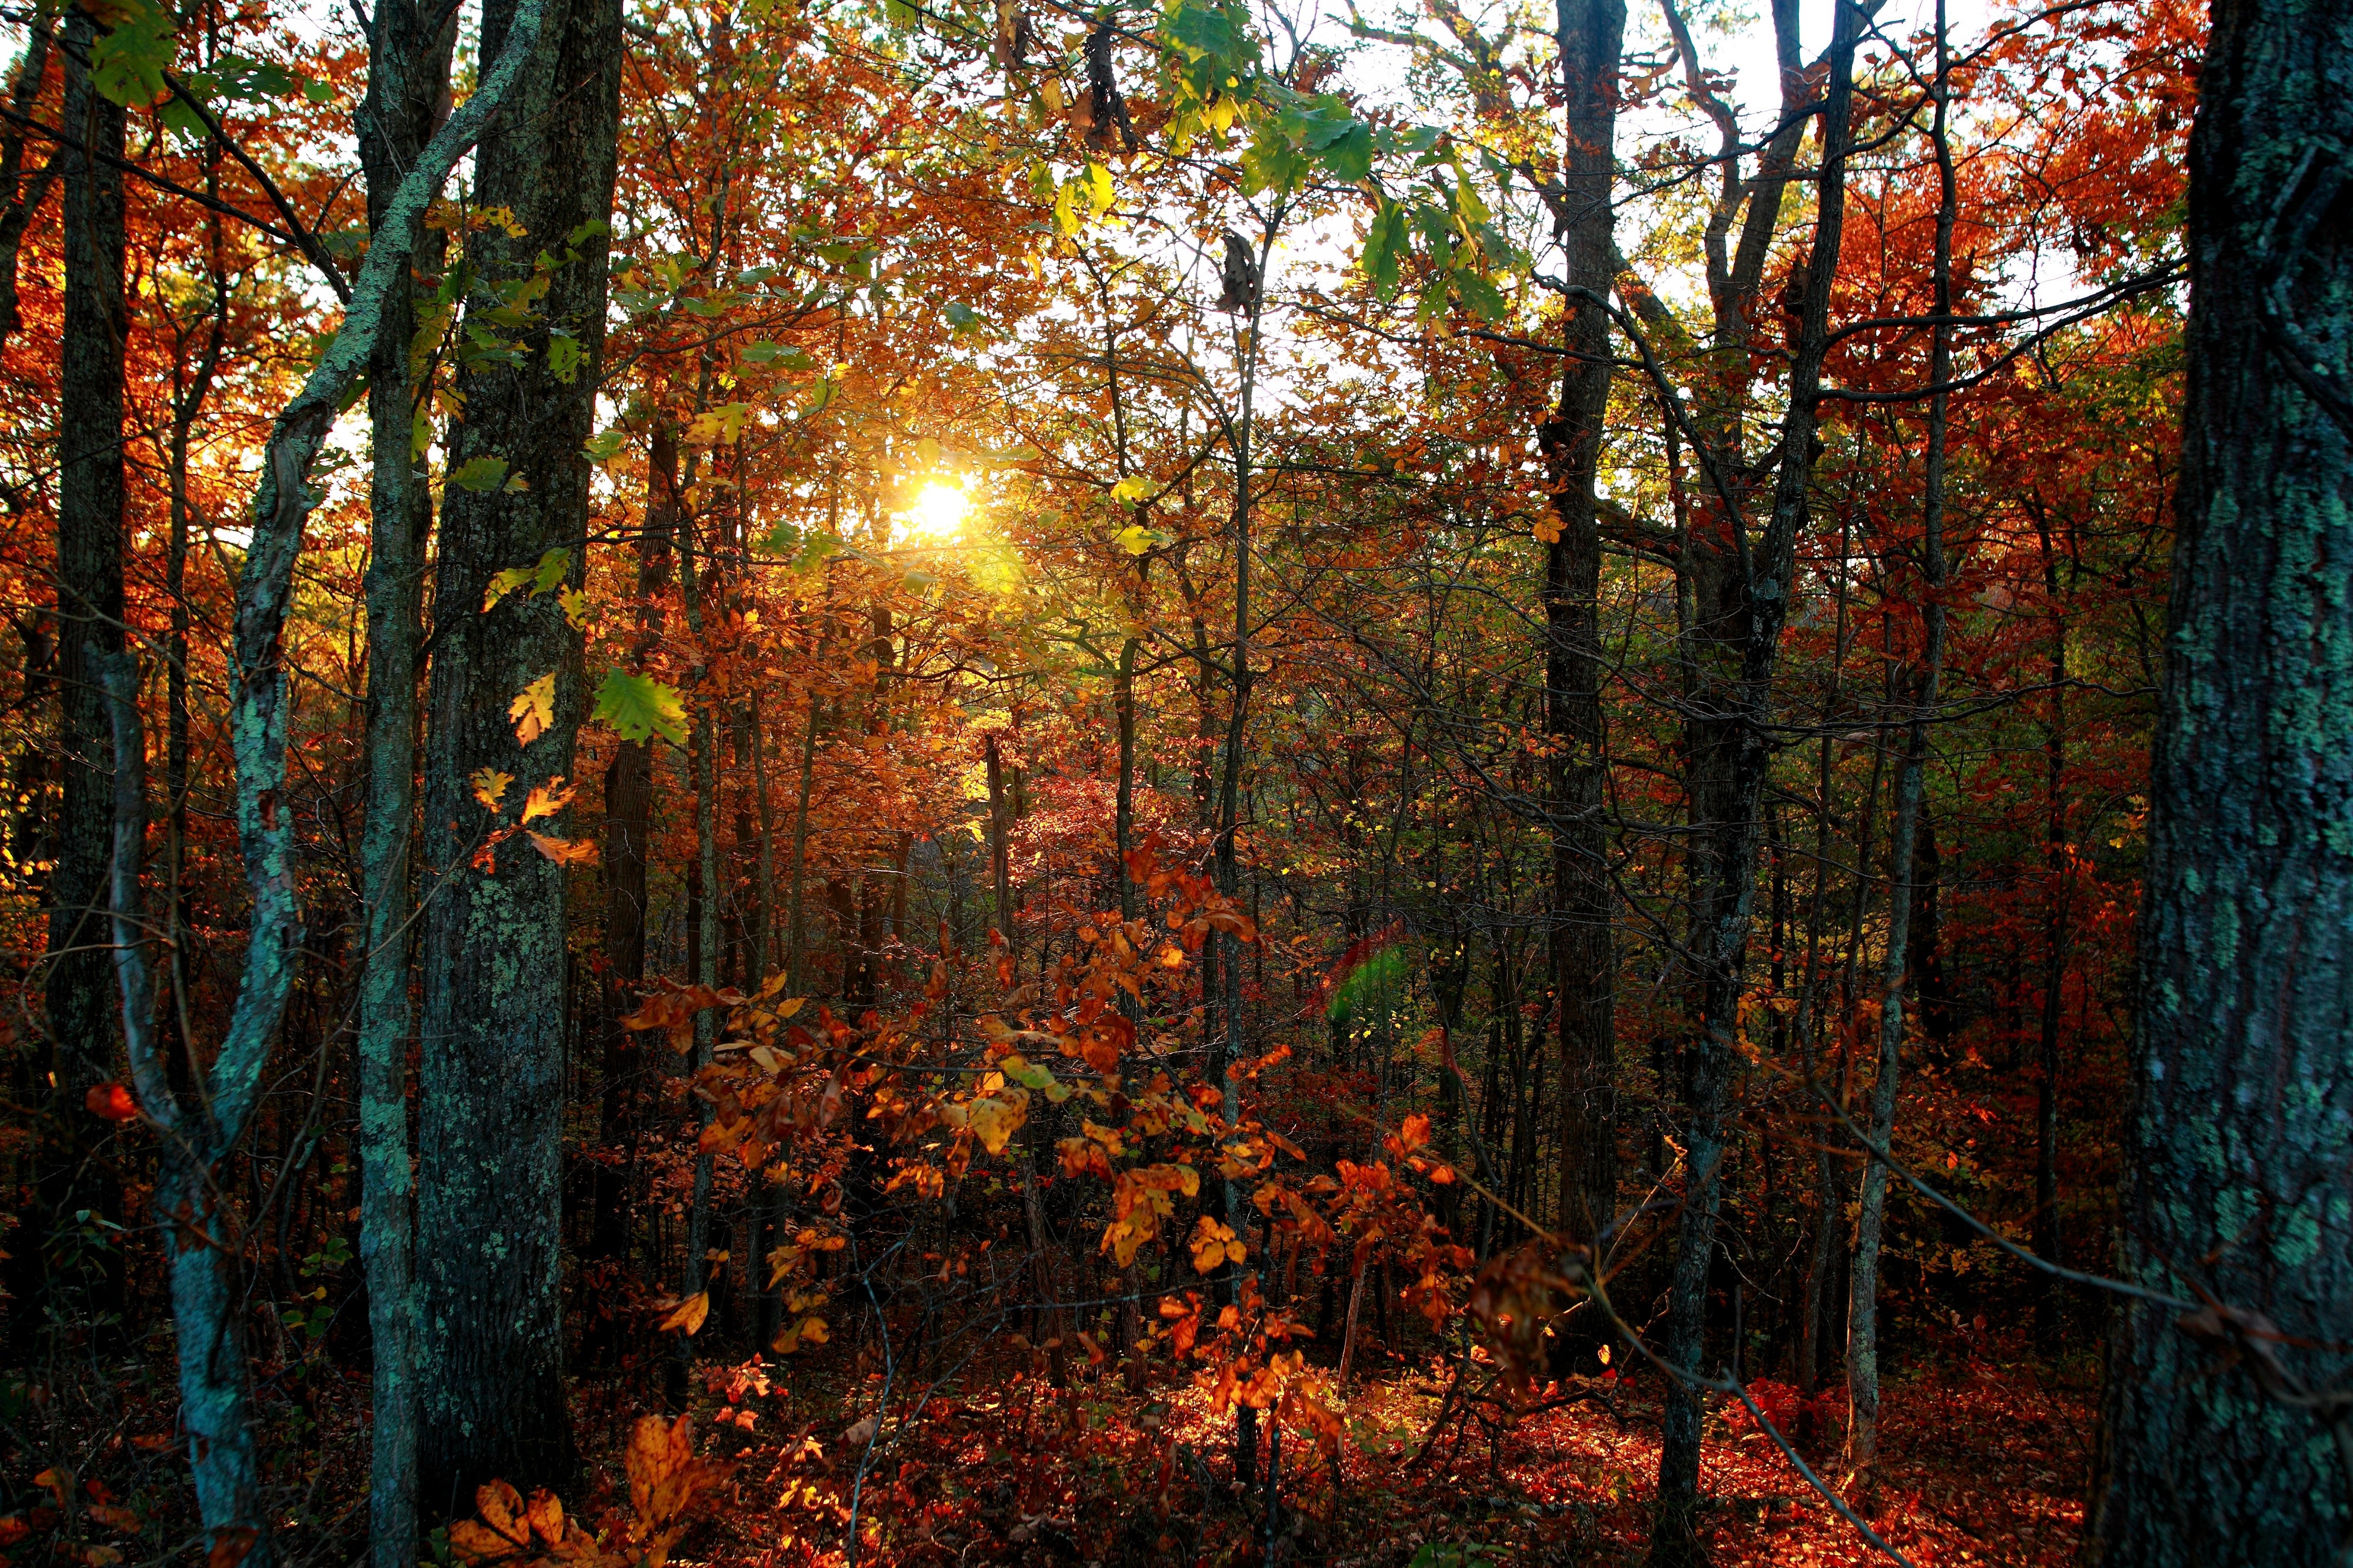 Autumn-trees-leaves-foliage-sunset - West Virginia - ForestWander